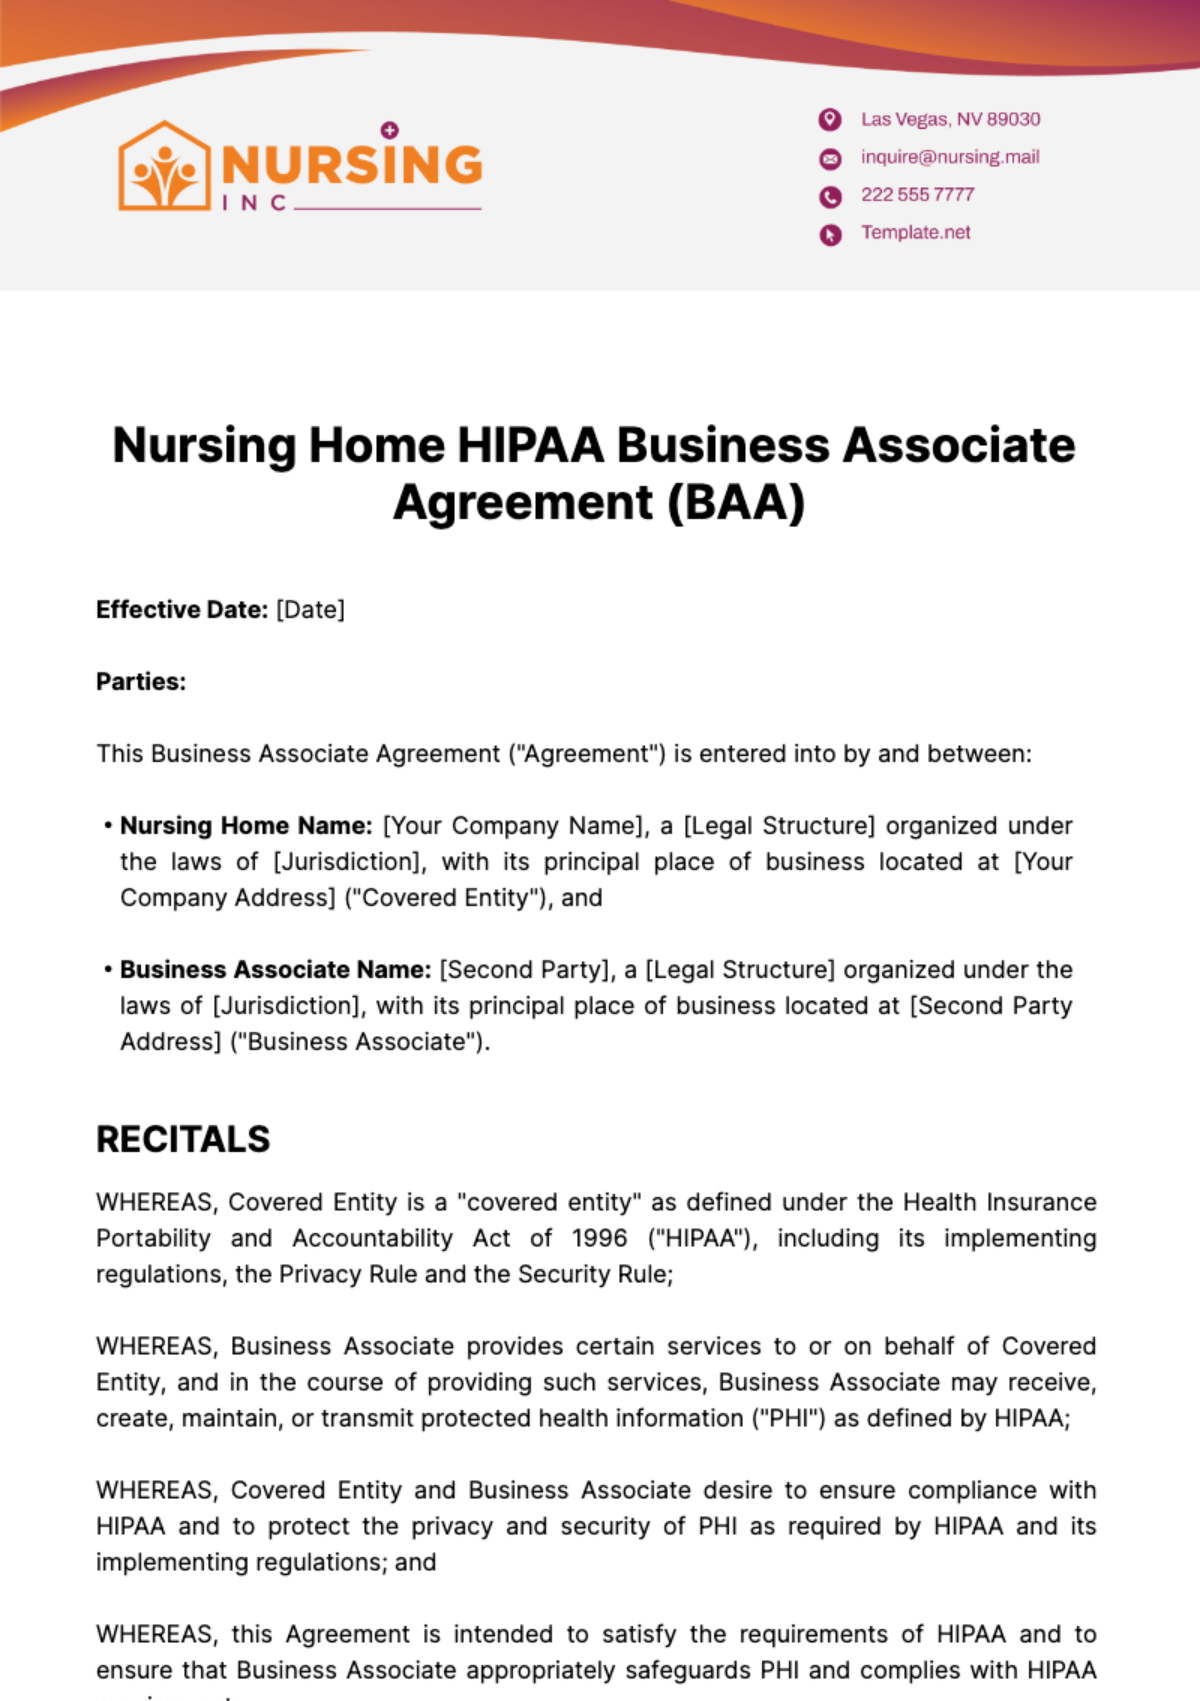 Free Nursing Home HIPAA Business Associate Agreement (BAA) Template